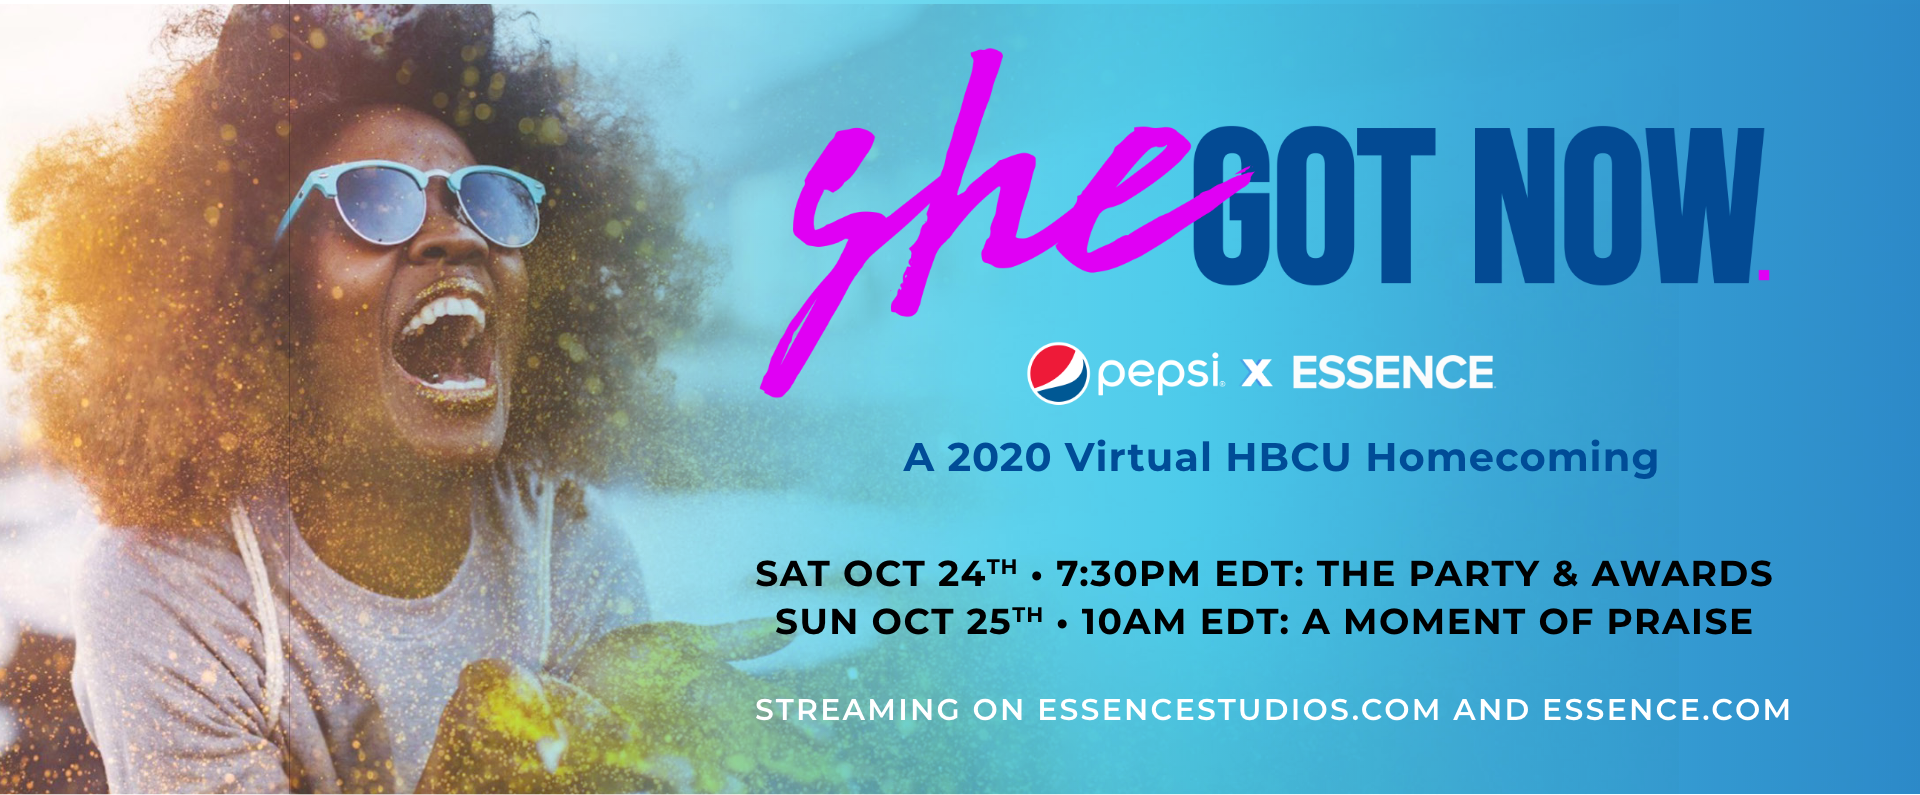 Pepsi x Essence's She Got Now: A 2020 Virtual HBCU Homecoming